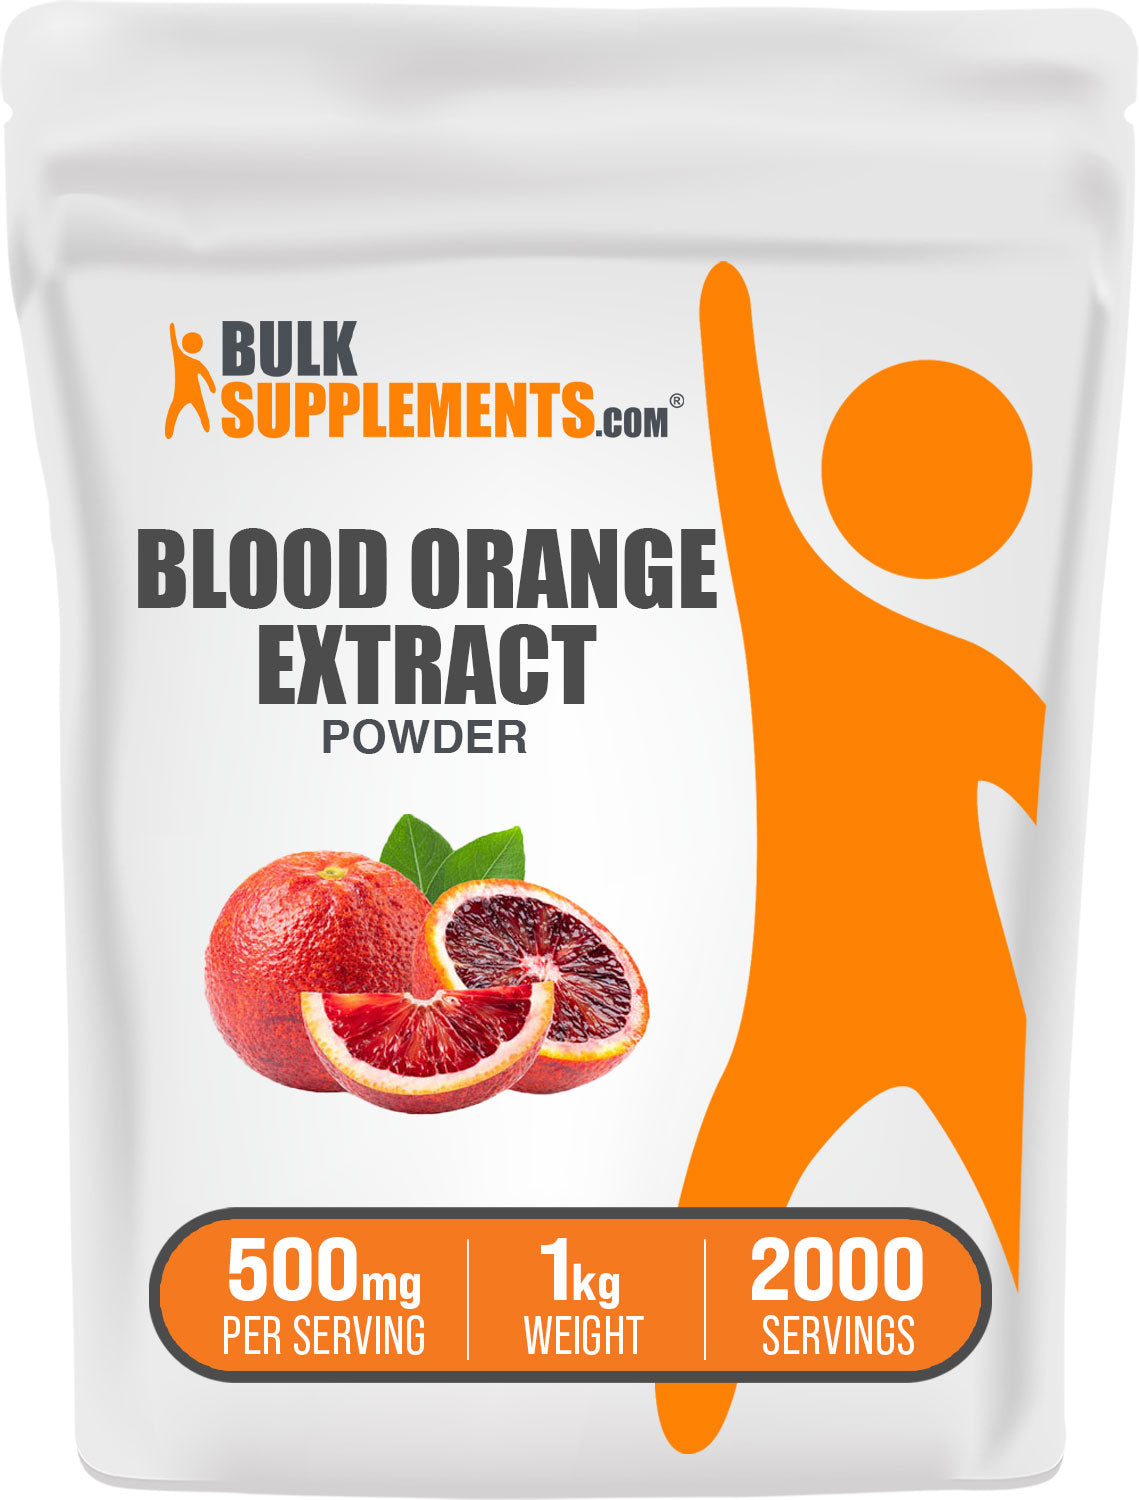 1kg of Blood Orange Extract Powder